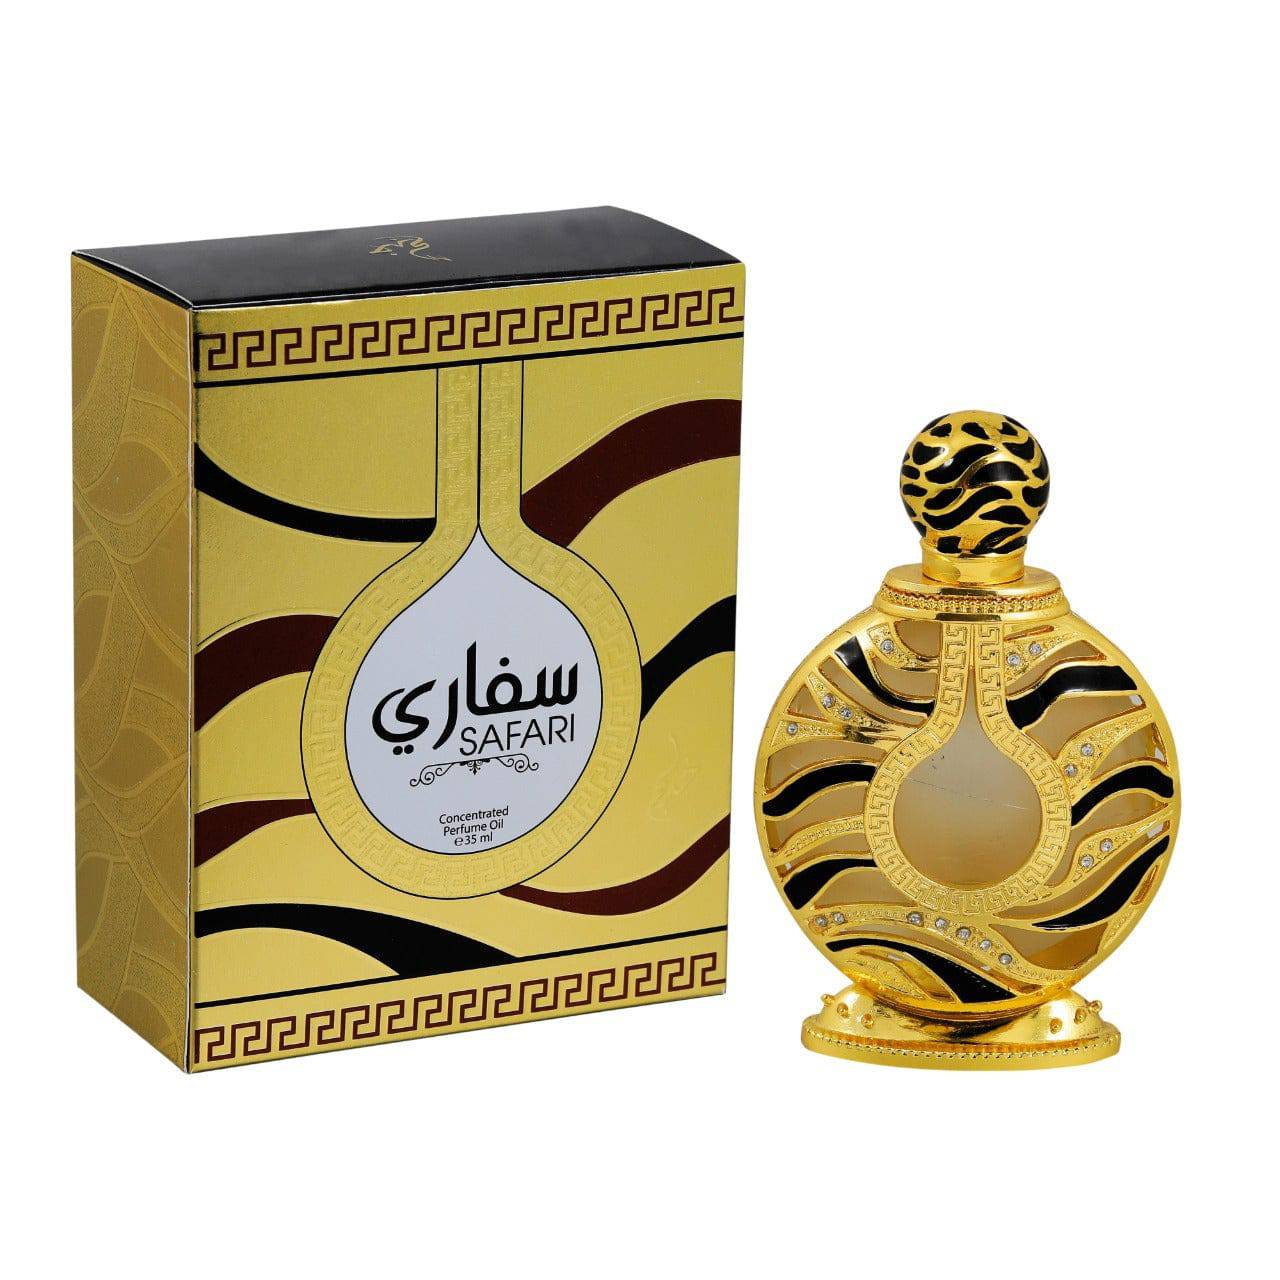 Safari Gold Perfume Oil-35ml by Khadlaj - Intense oud